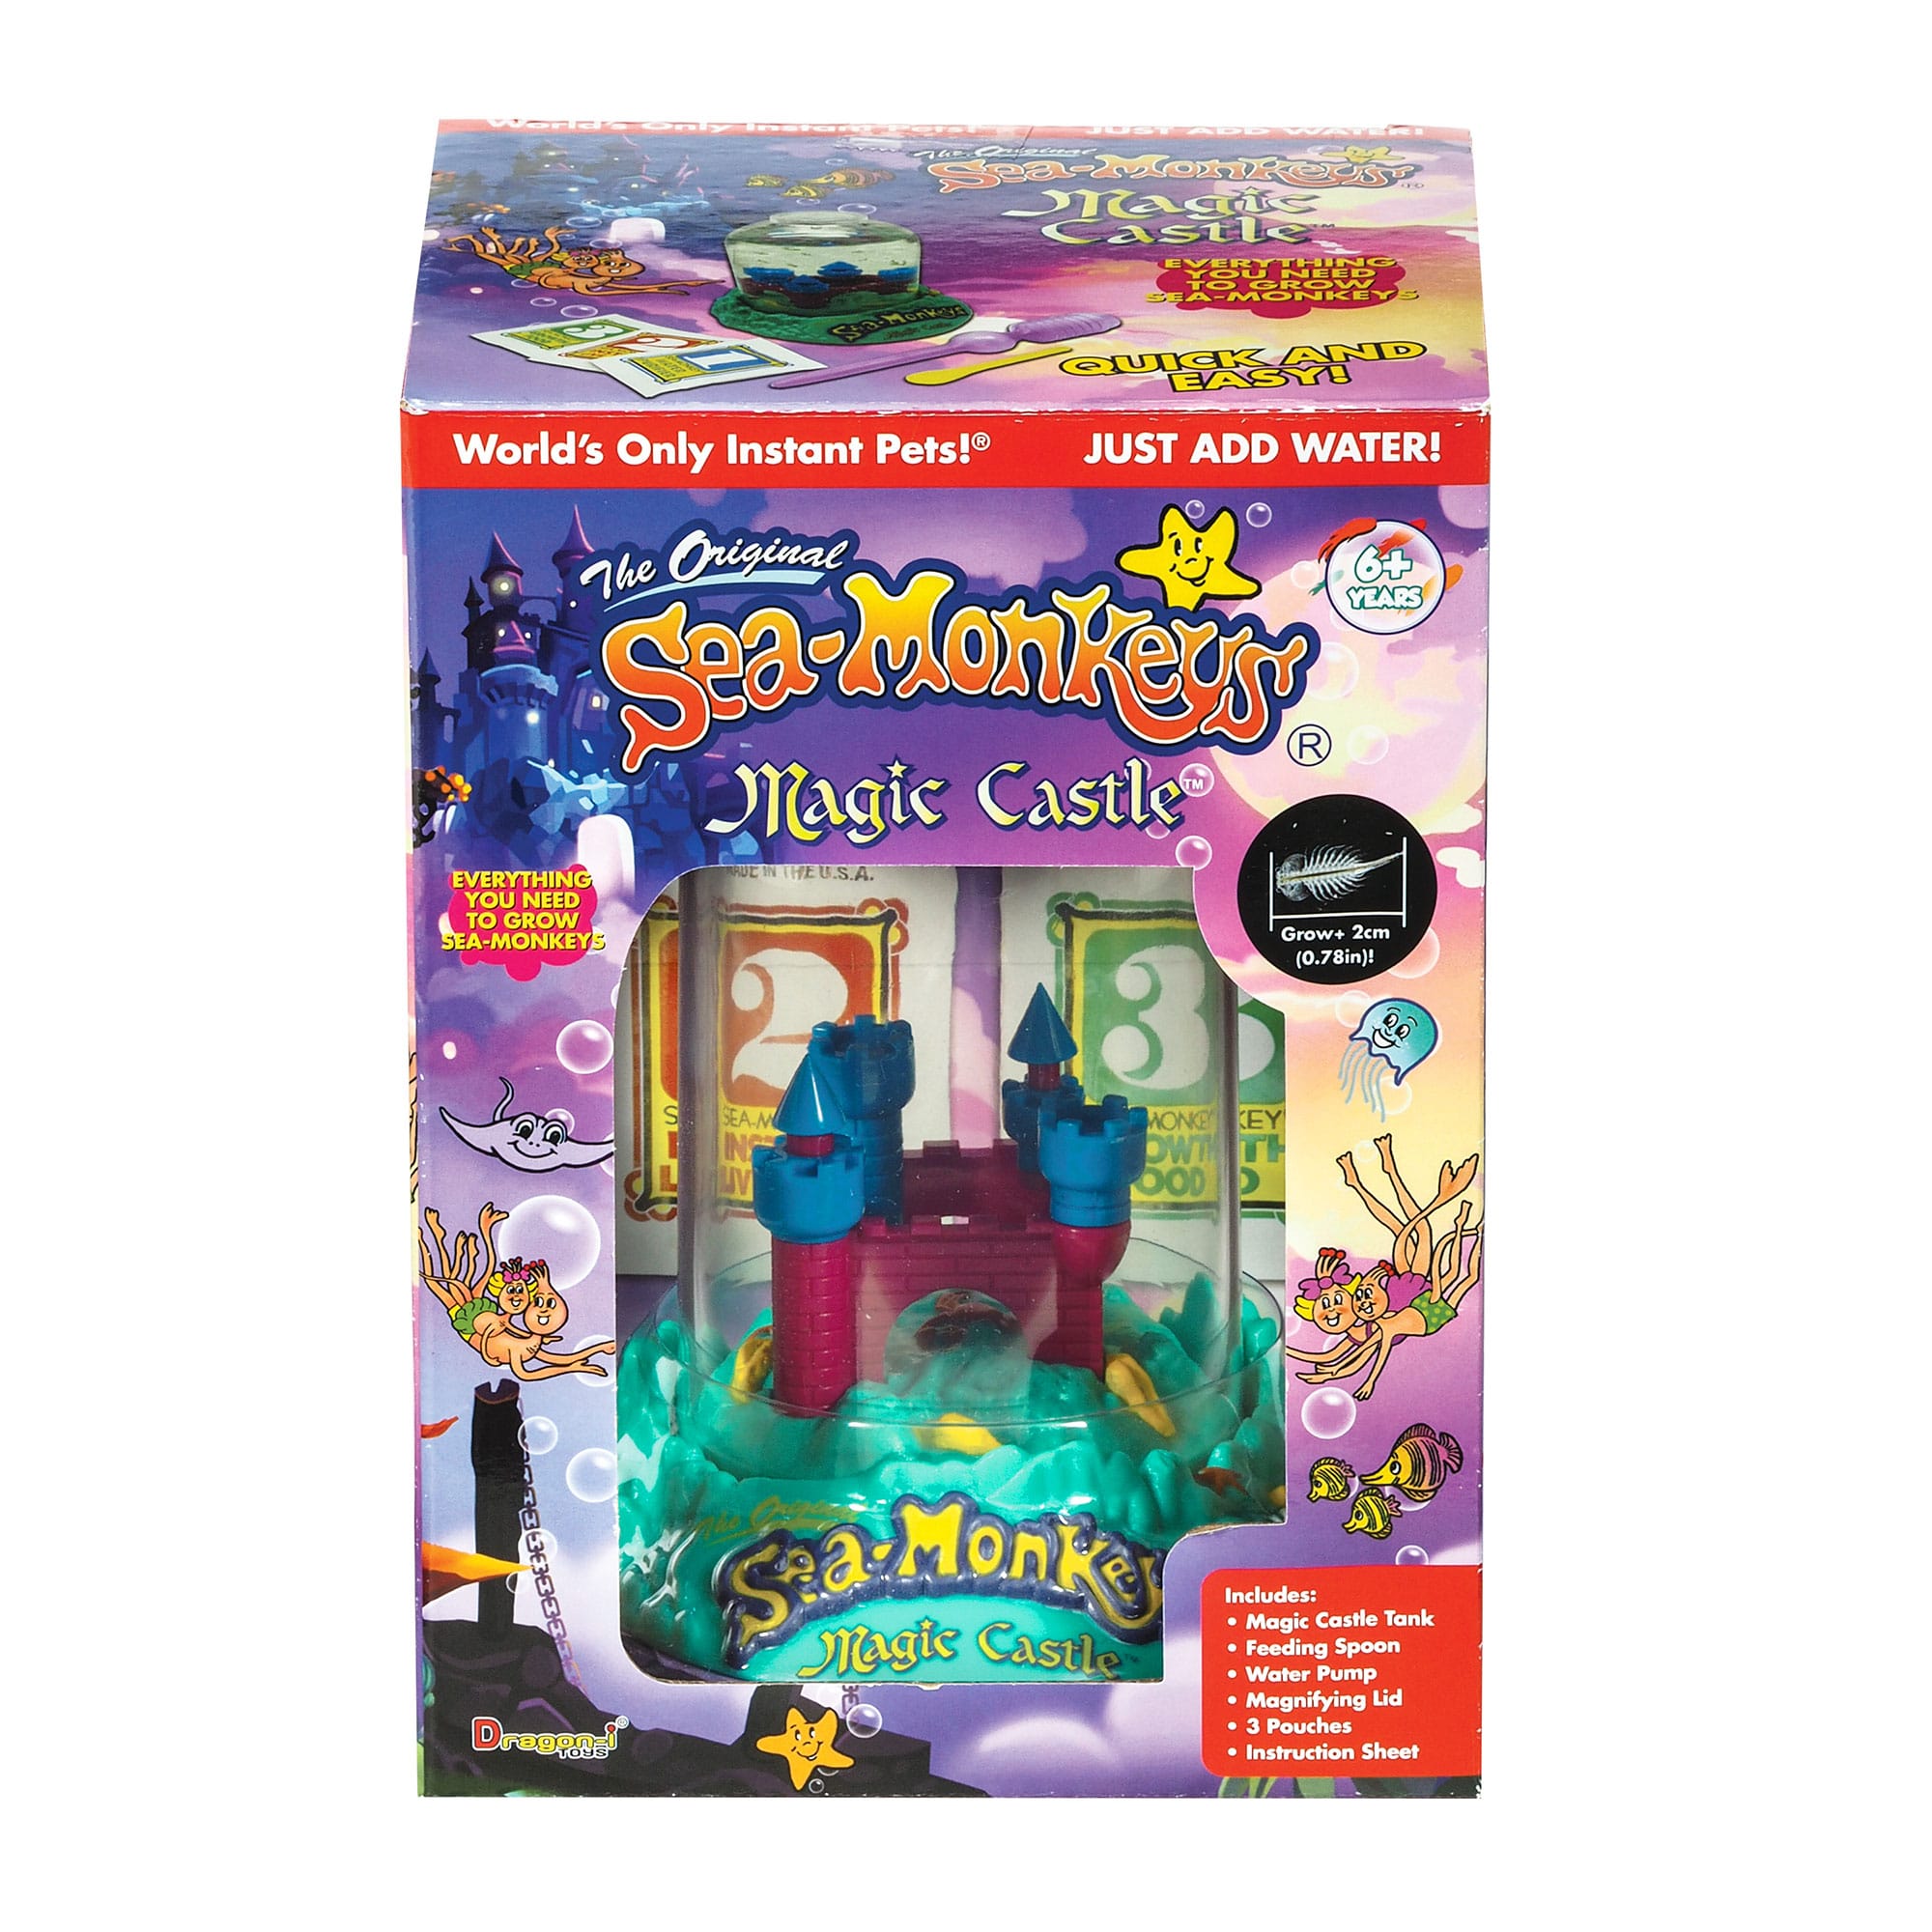 The Original Sea Monkey Magic Castle #23230